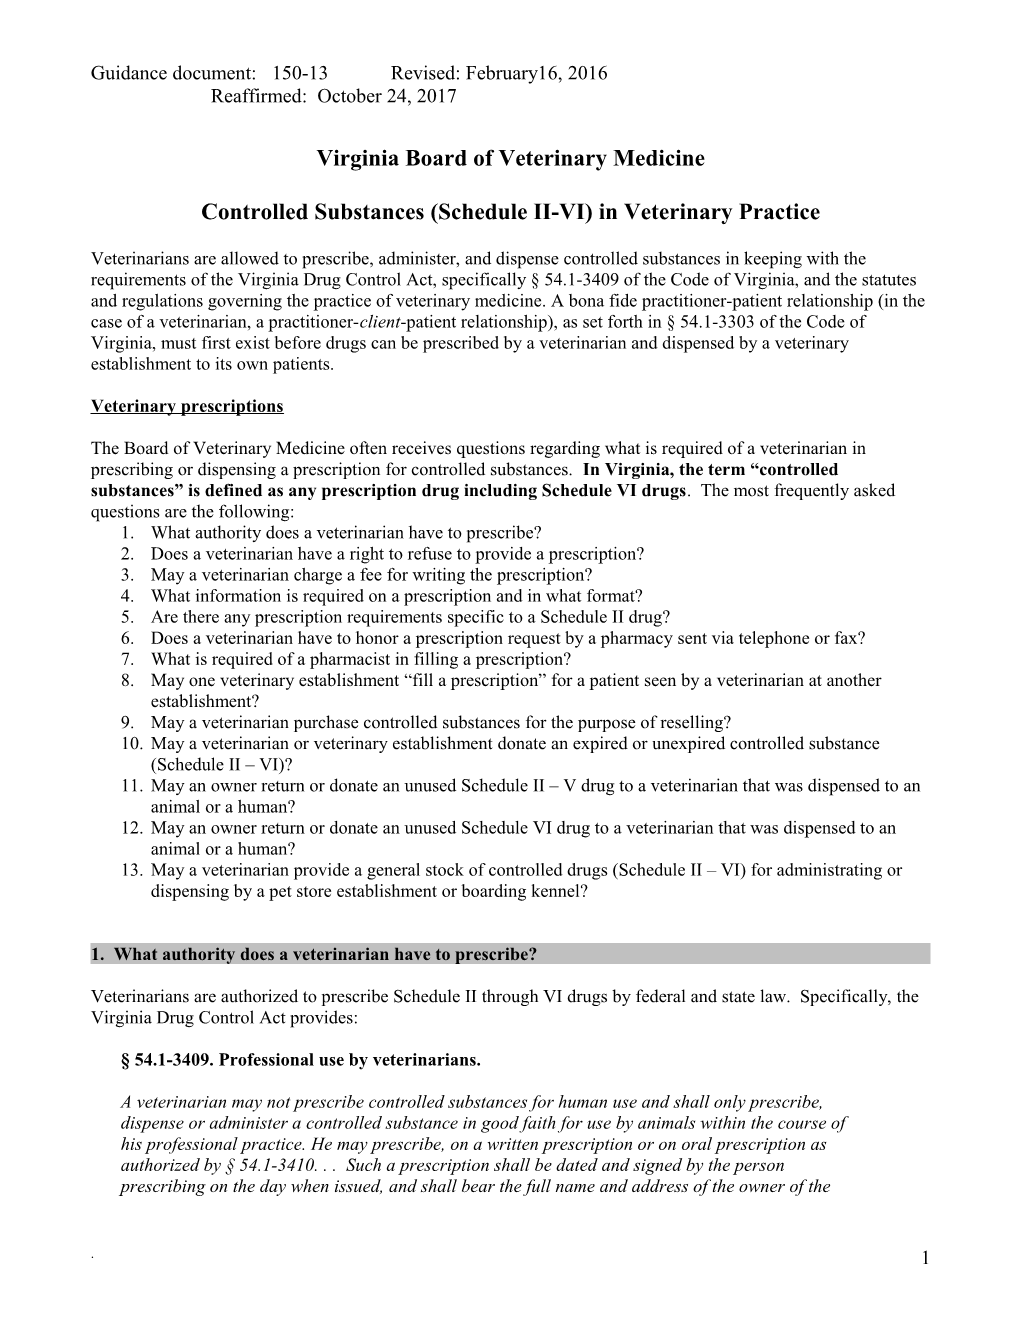 Guidance Document 150-13: Veterinary Prescriptions